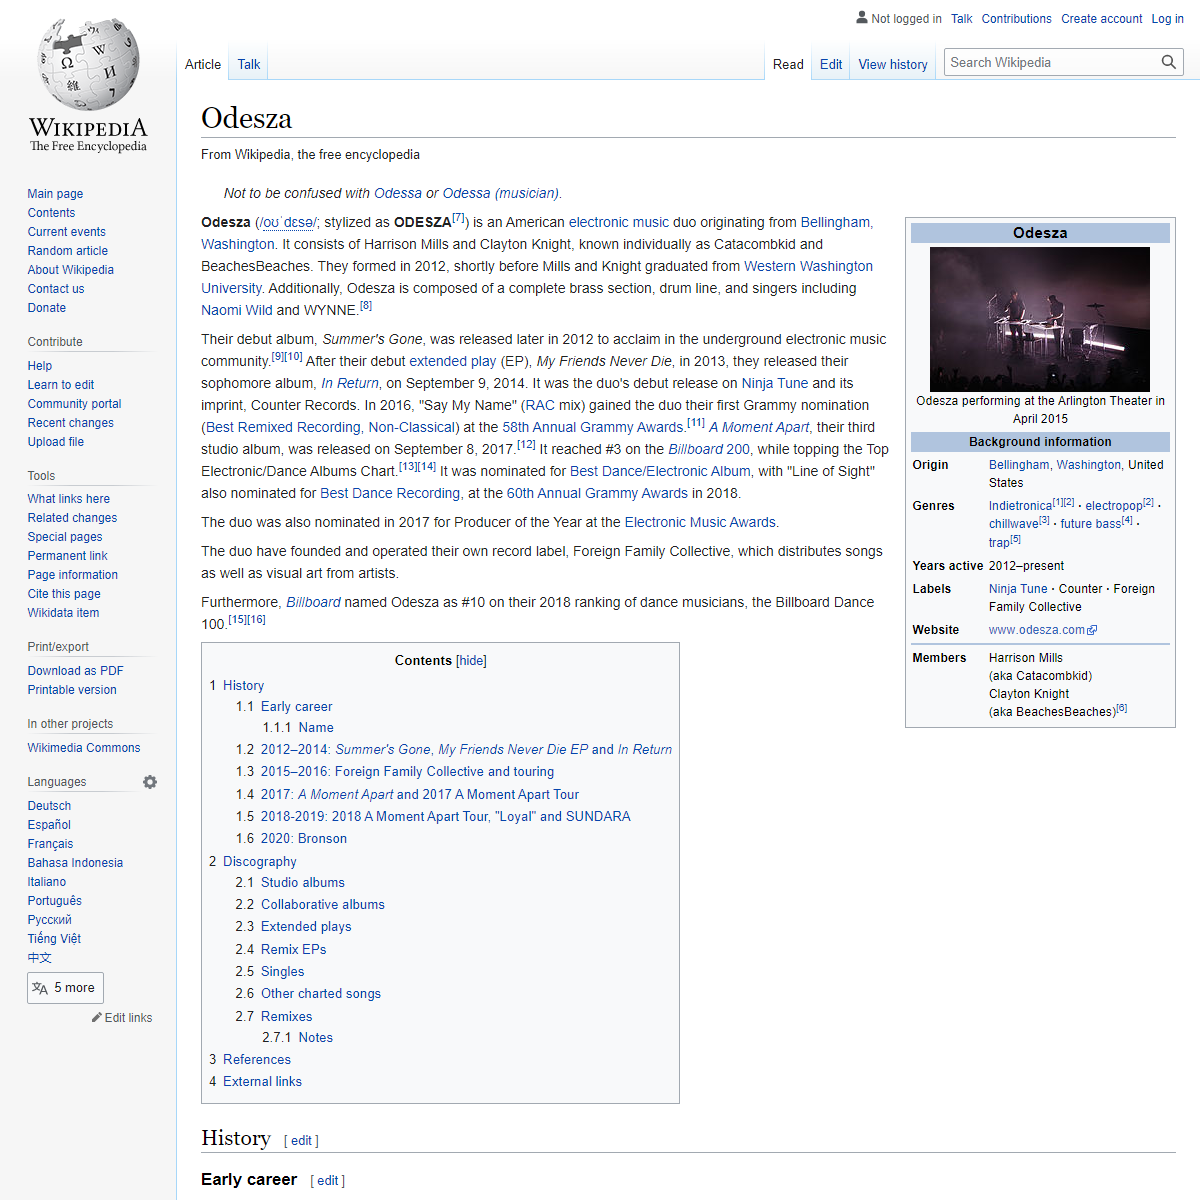 A complete backup of https://en.wikipedia.org/wiki/Odesza